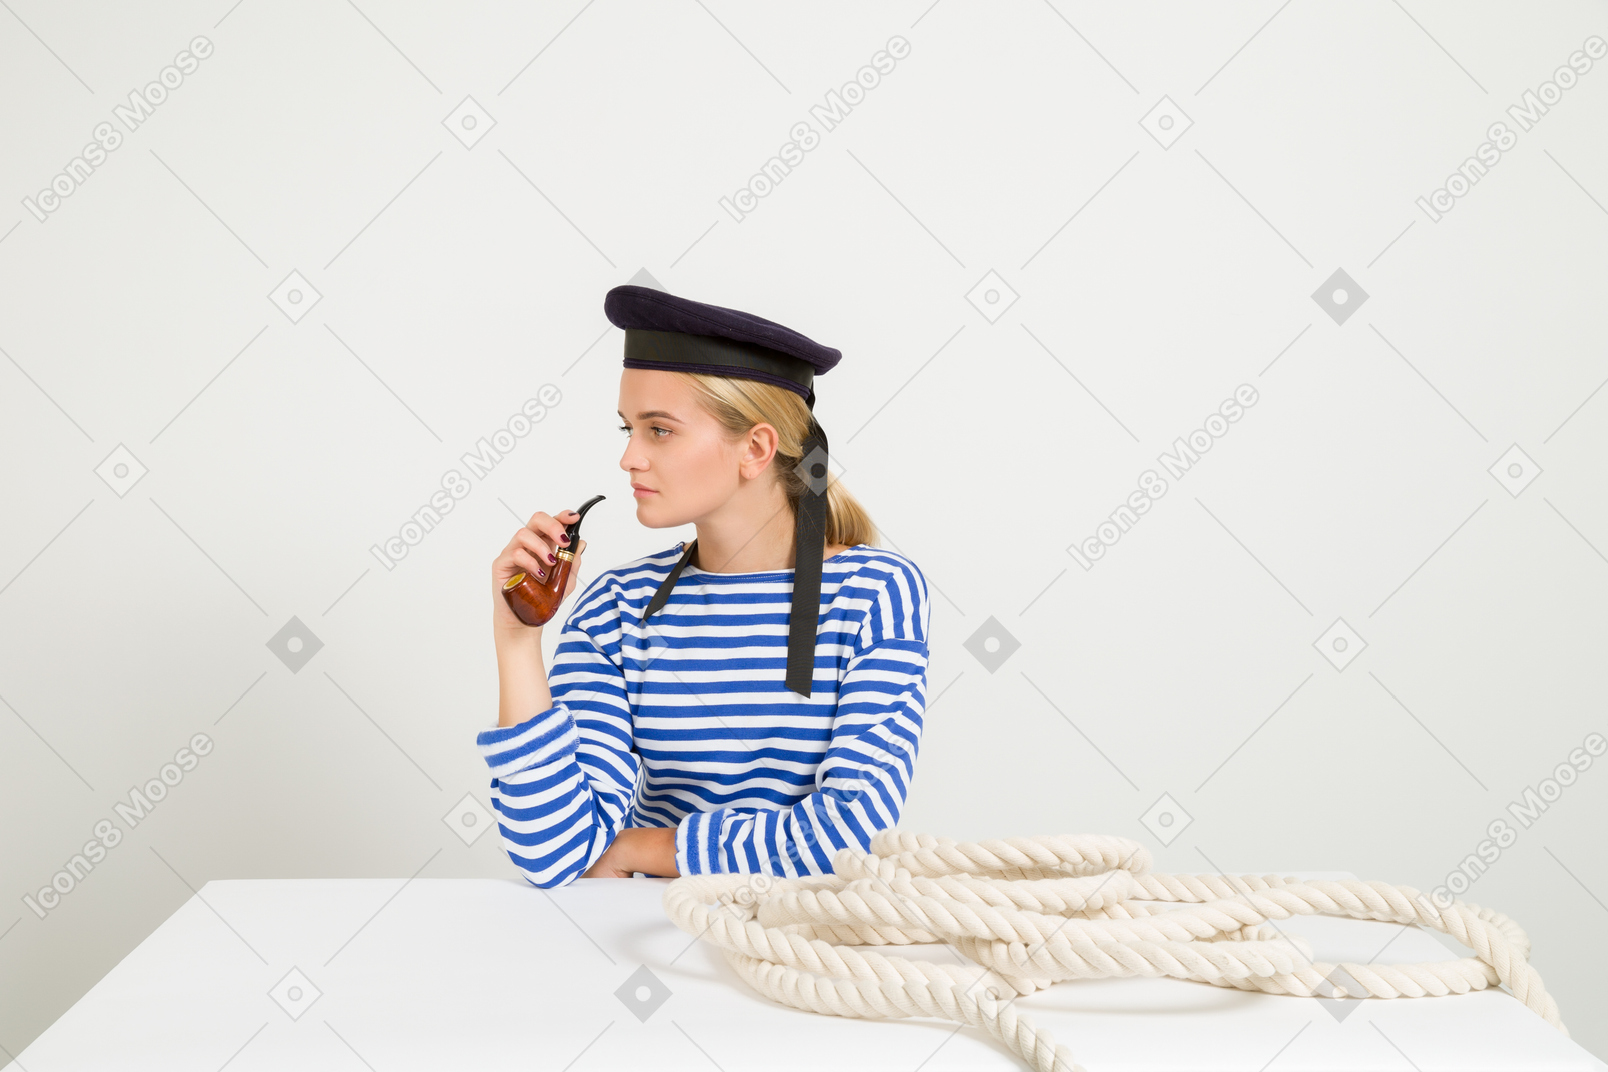 Female sailor holding smoking pipe